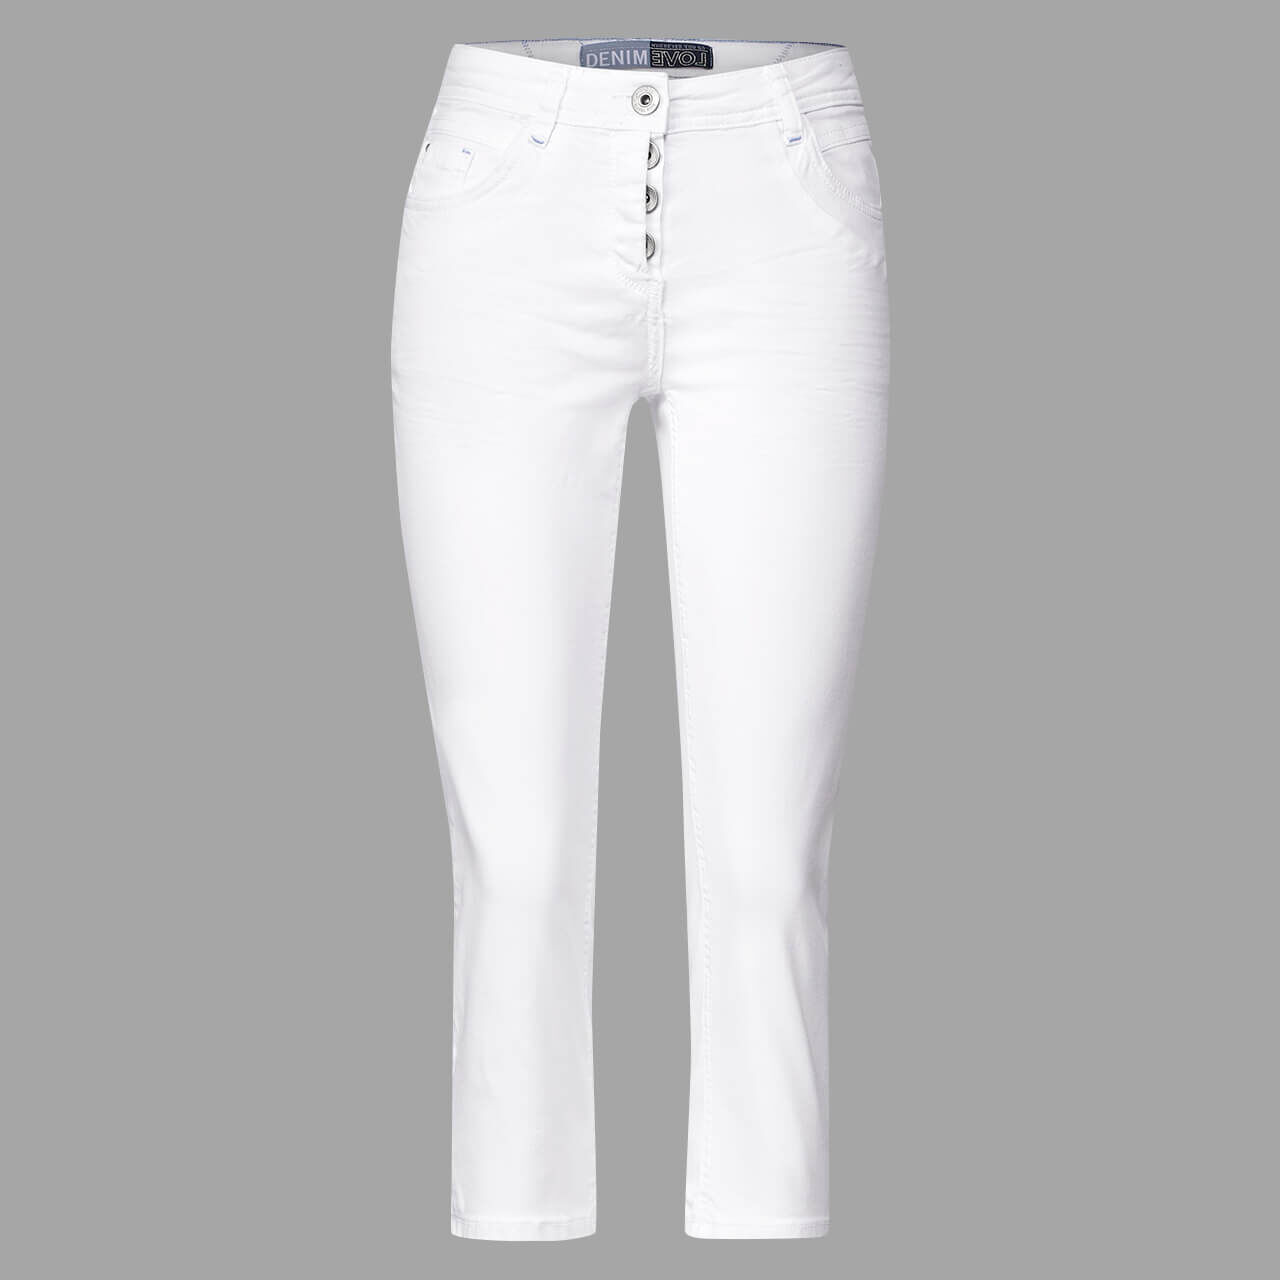 Cecil Scarlett Capri Jeans white